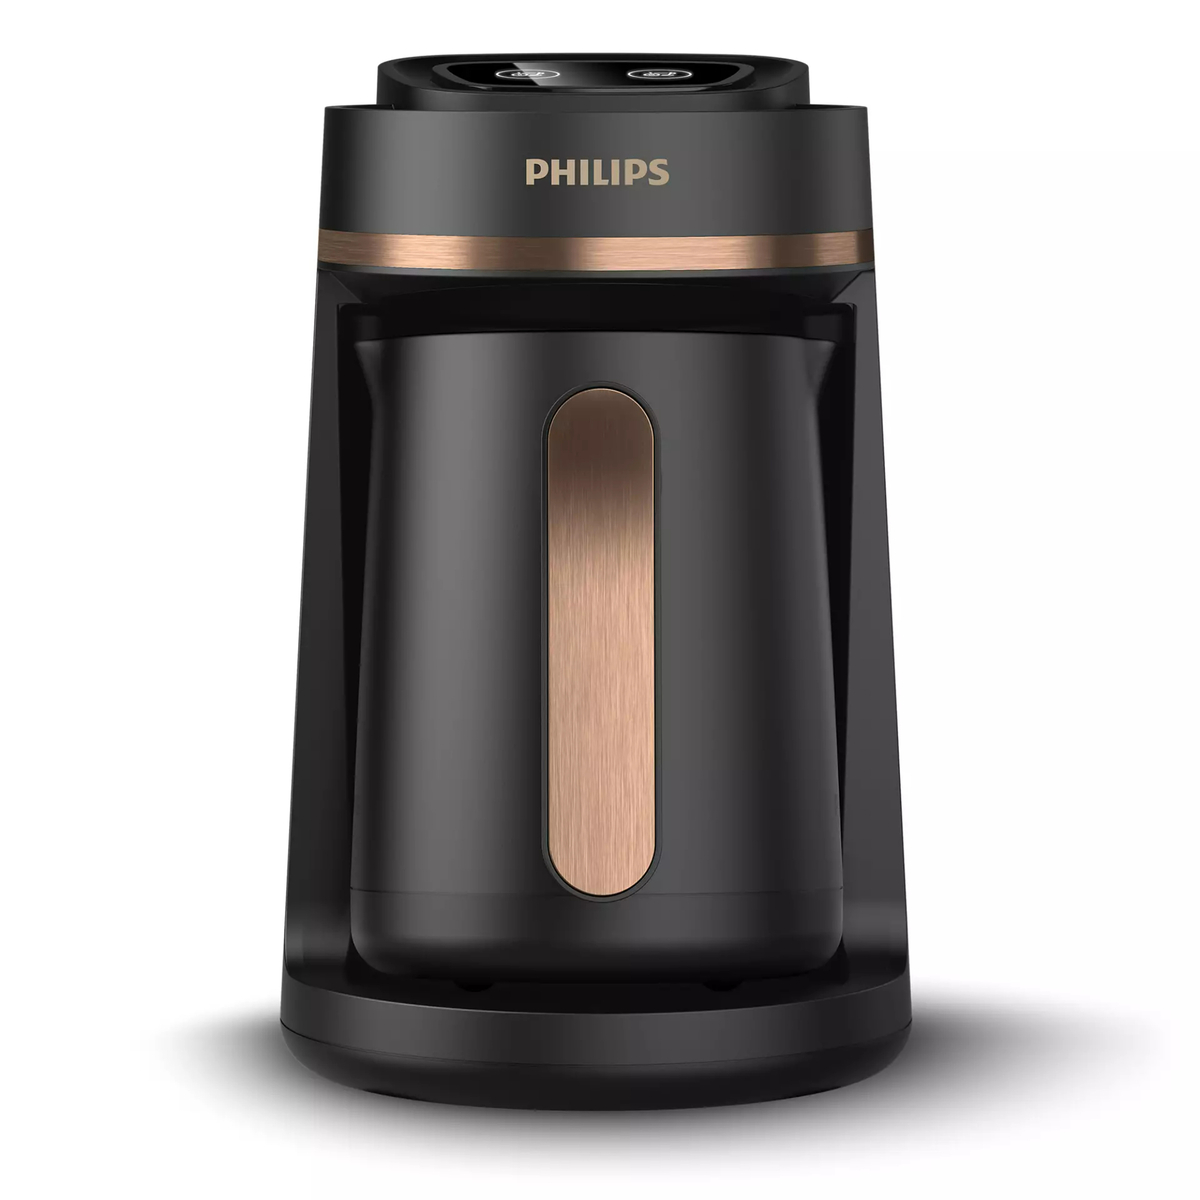 Philips 5000 Series Turkish Coffee maker, 735W, Black/Brushed Copper, HDA150/62